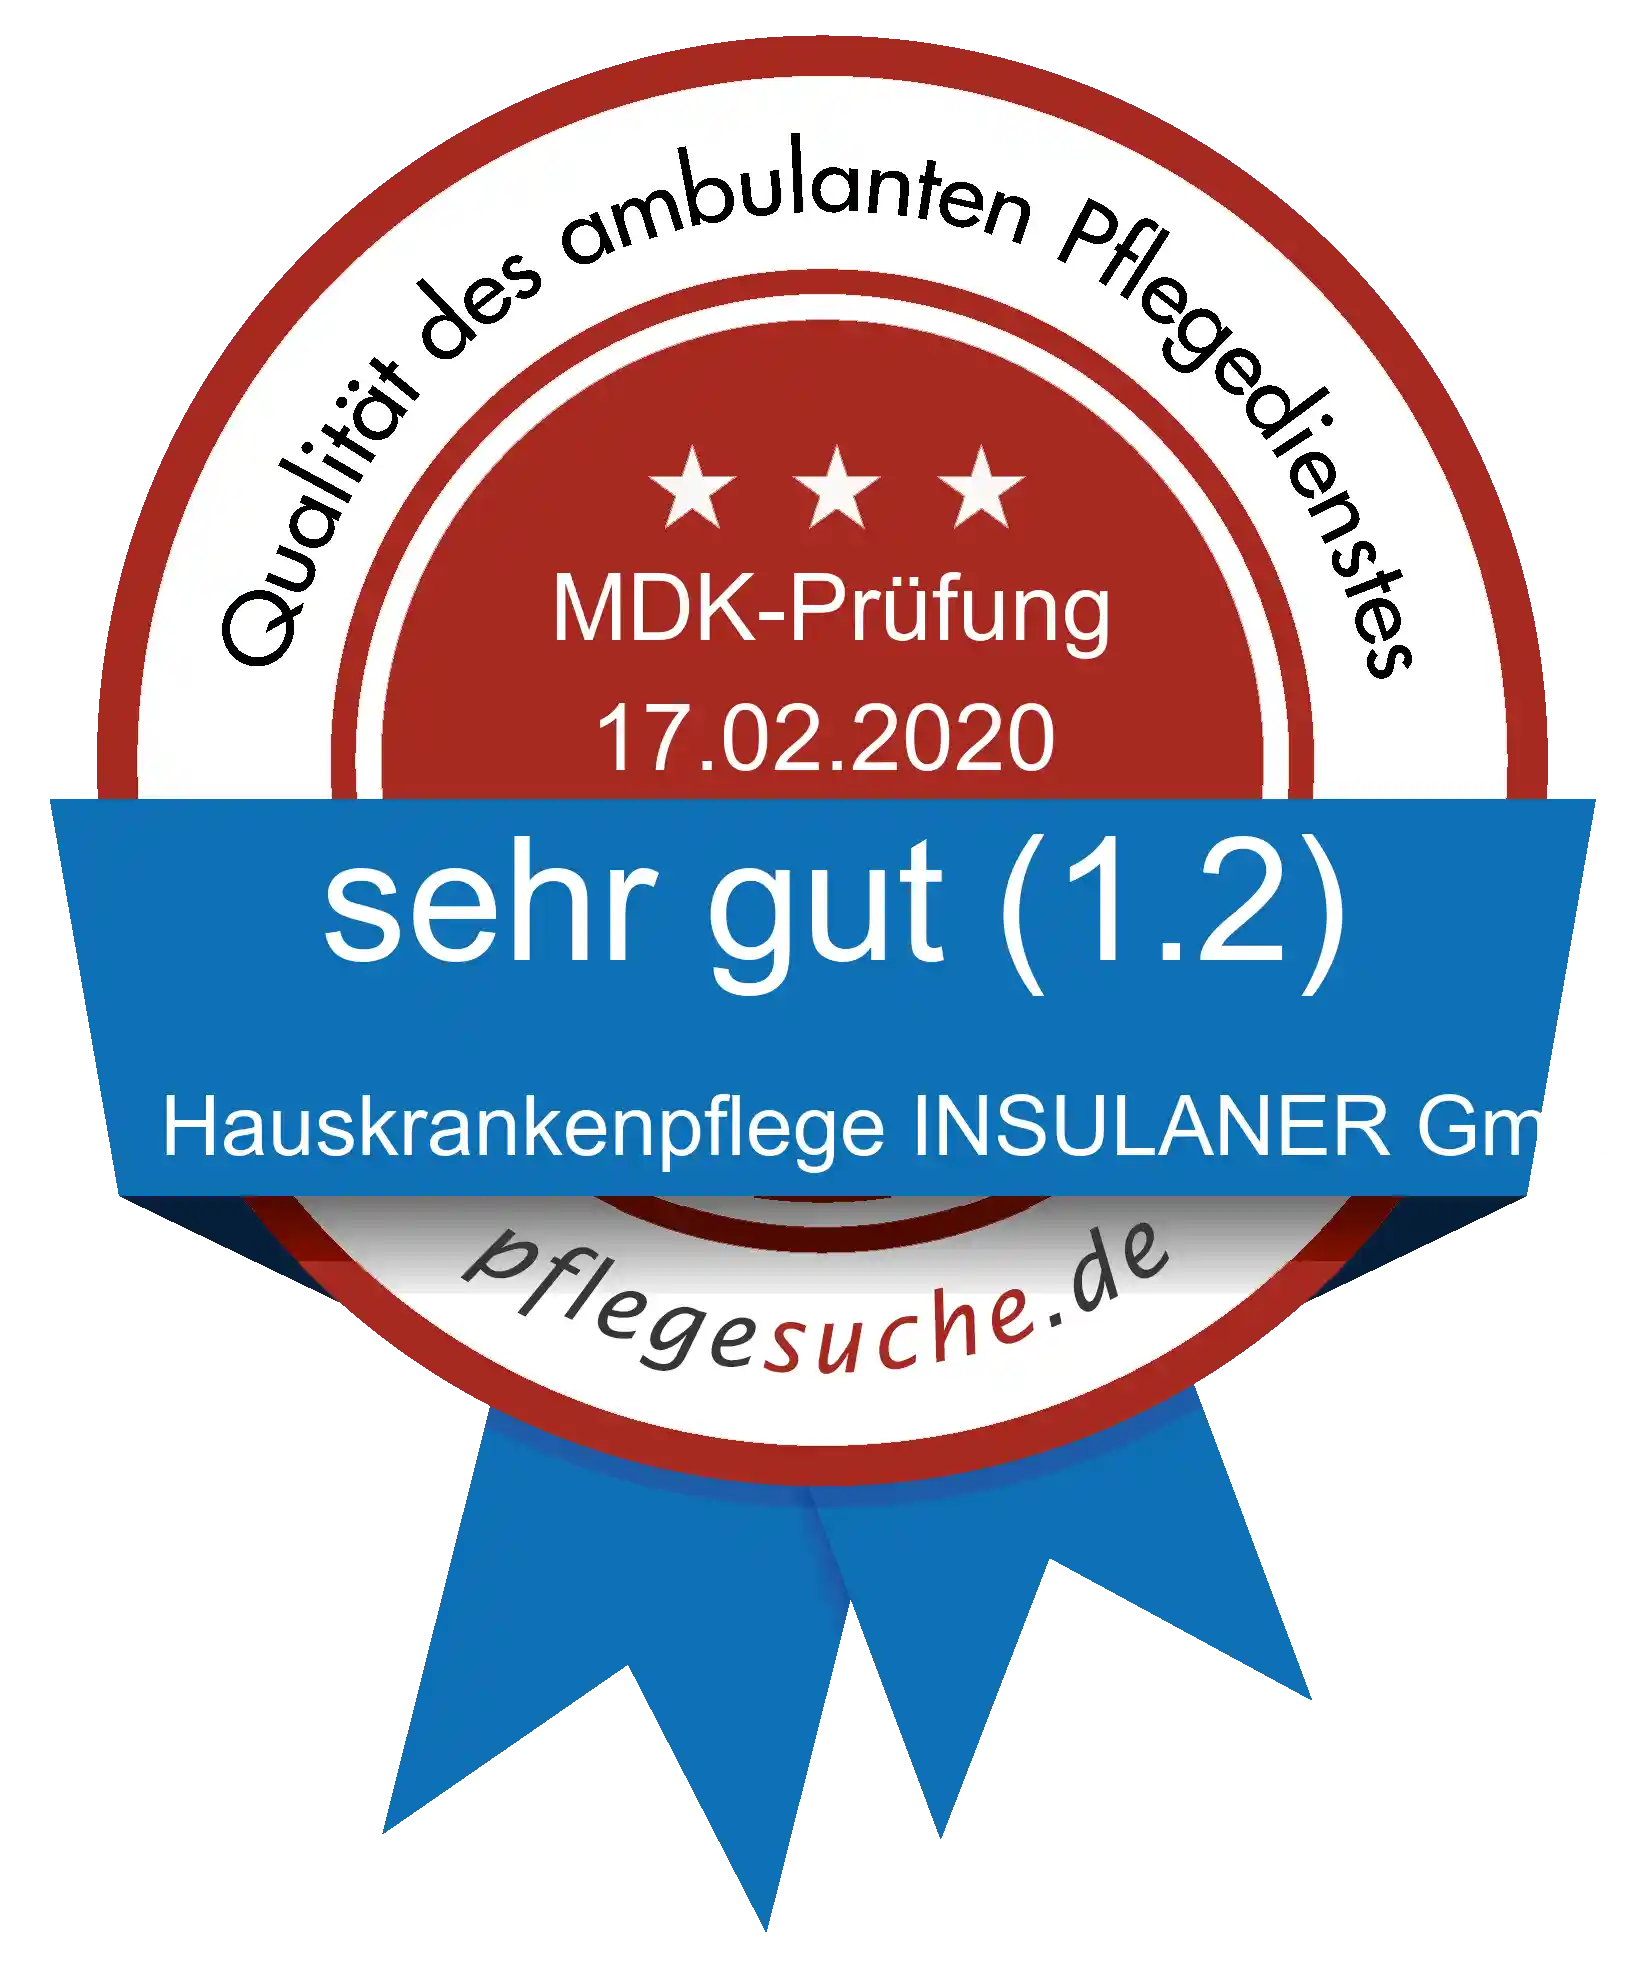 Siegel Benotung: Hauskrankenpflege INSULANER GmbH